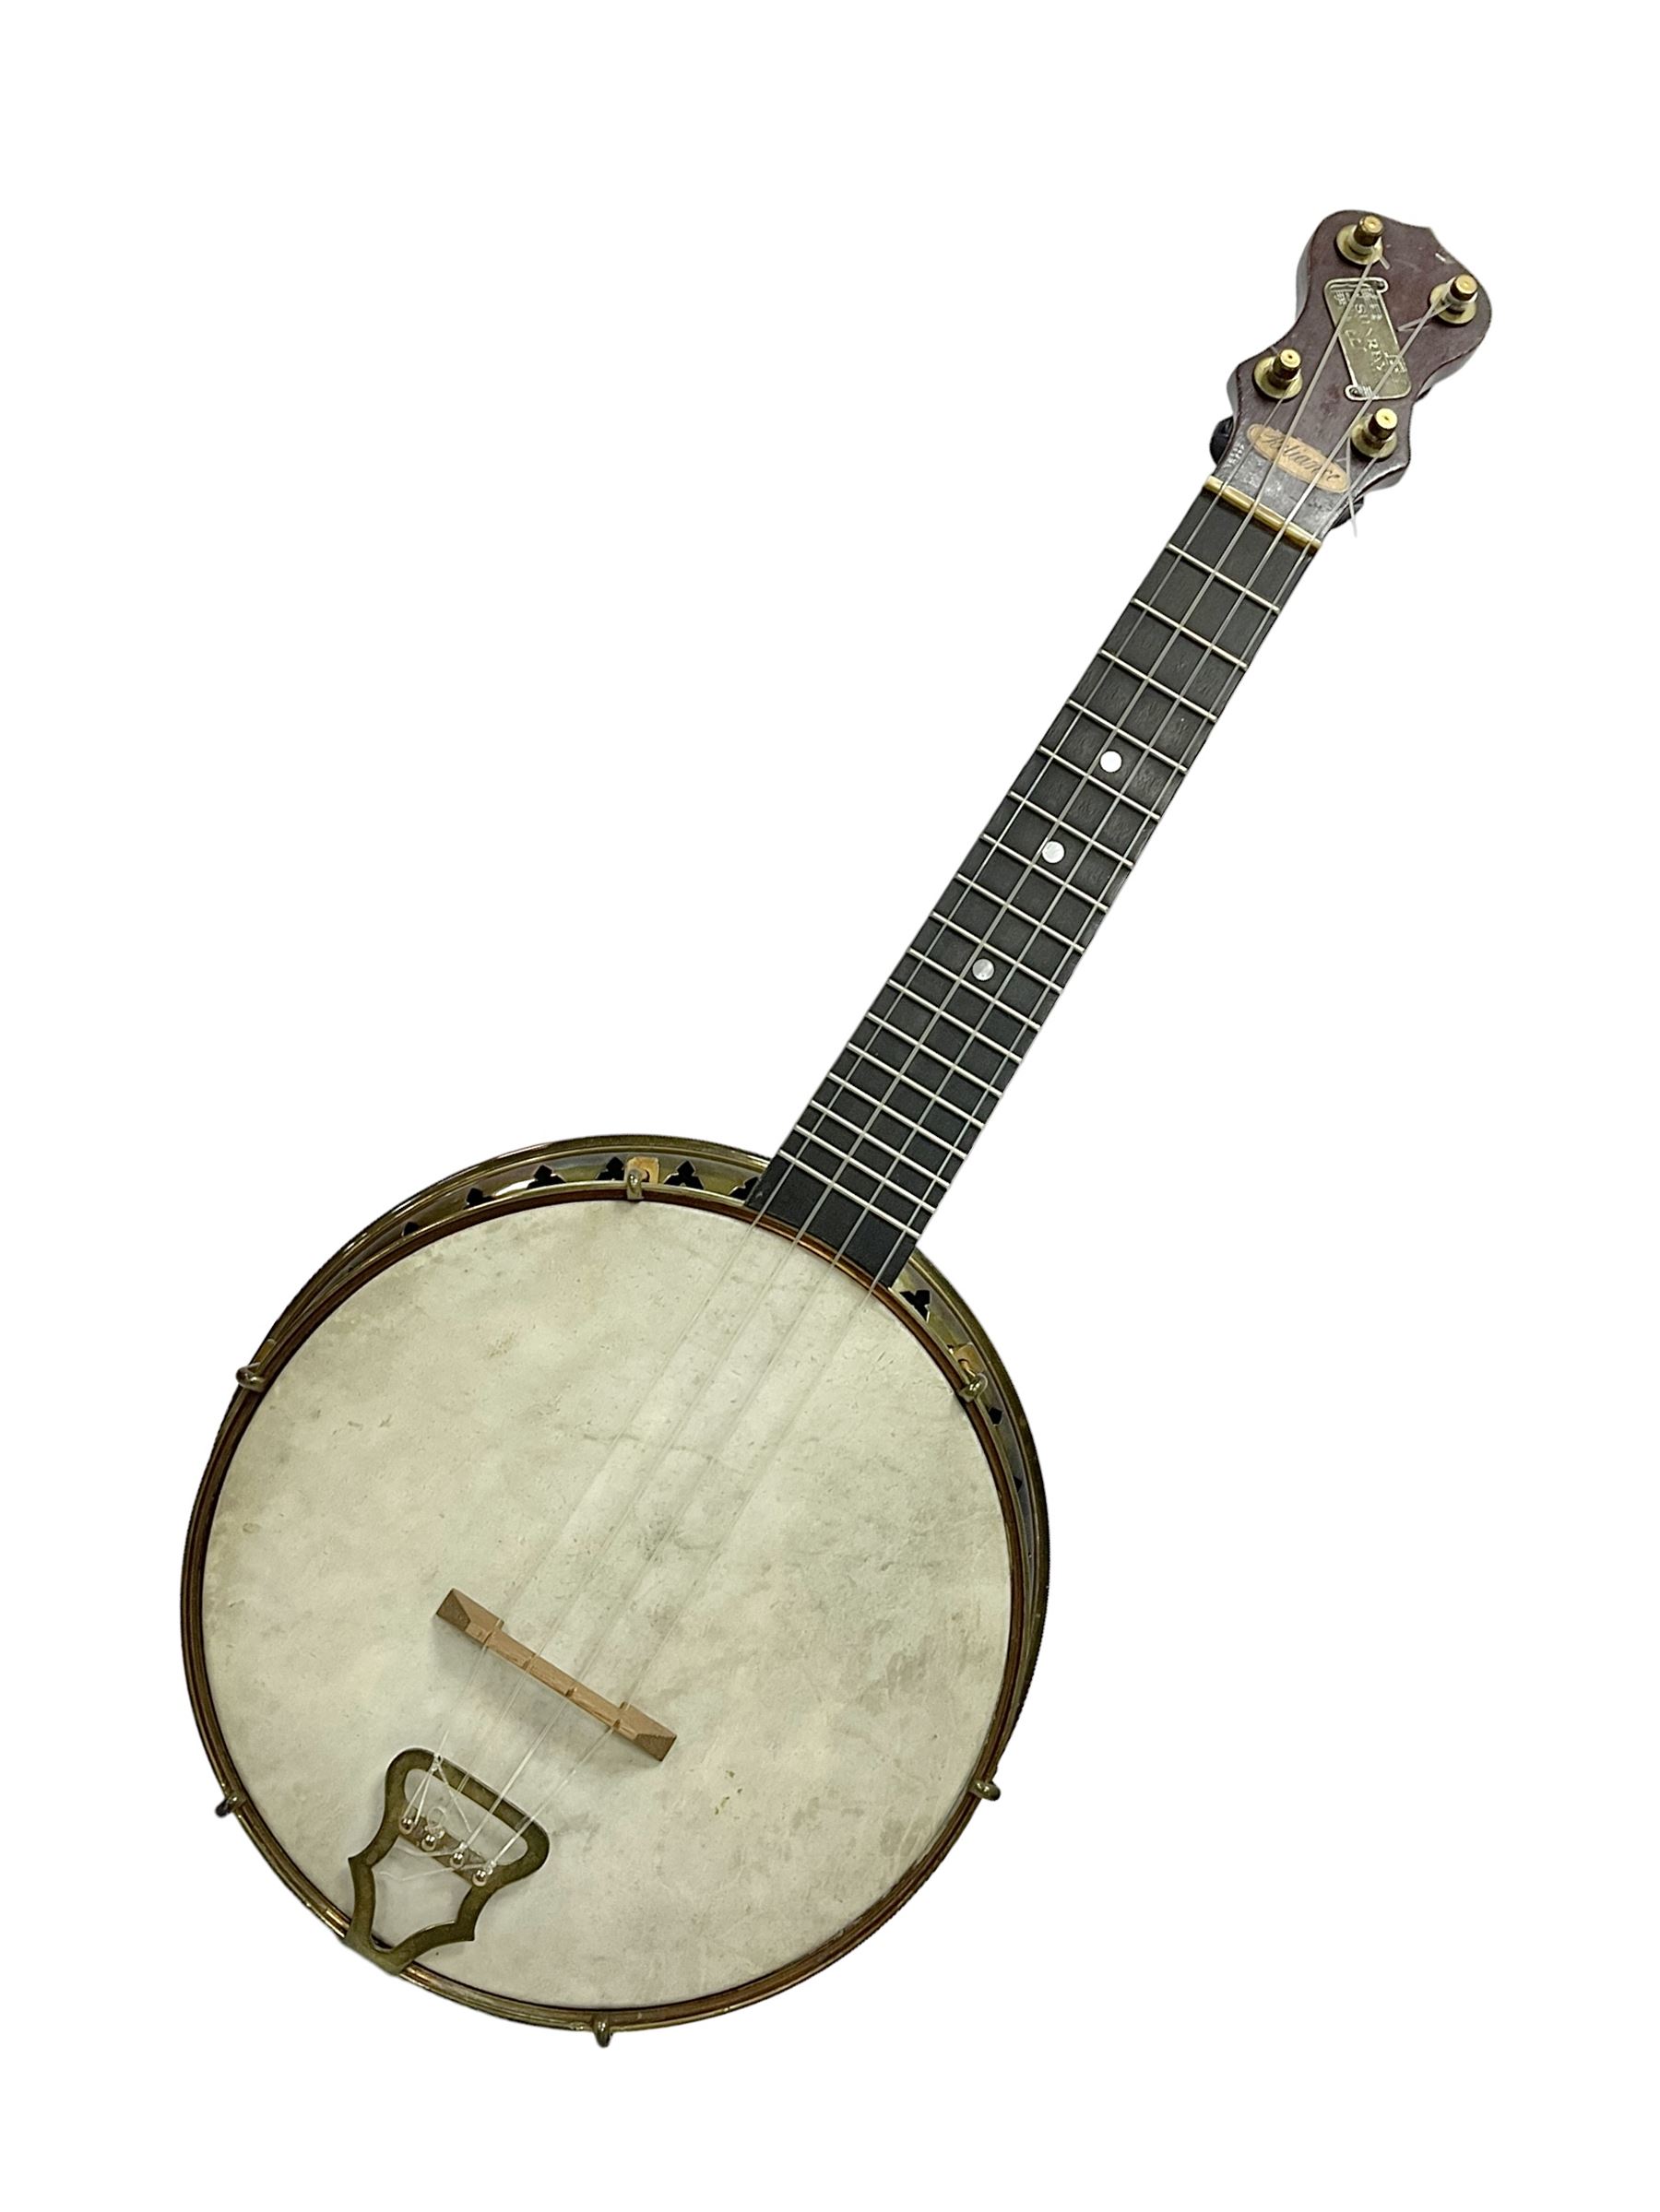 English Sunray 4-string mandolin in a shaped hard case